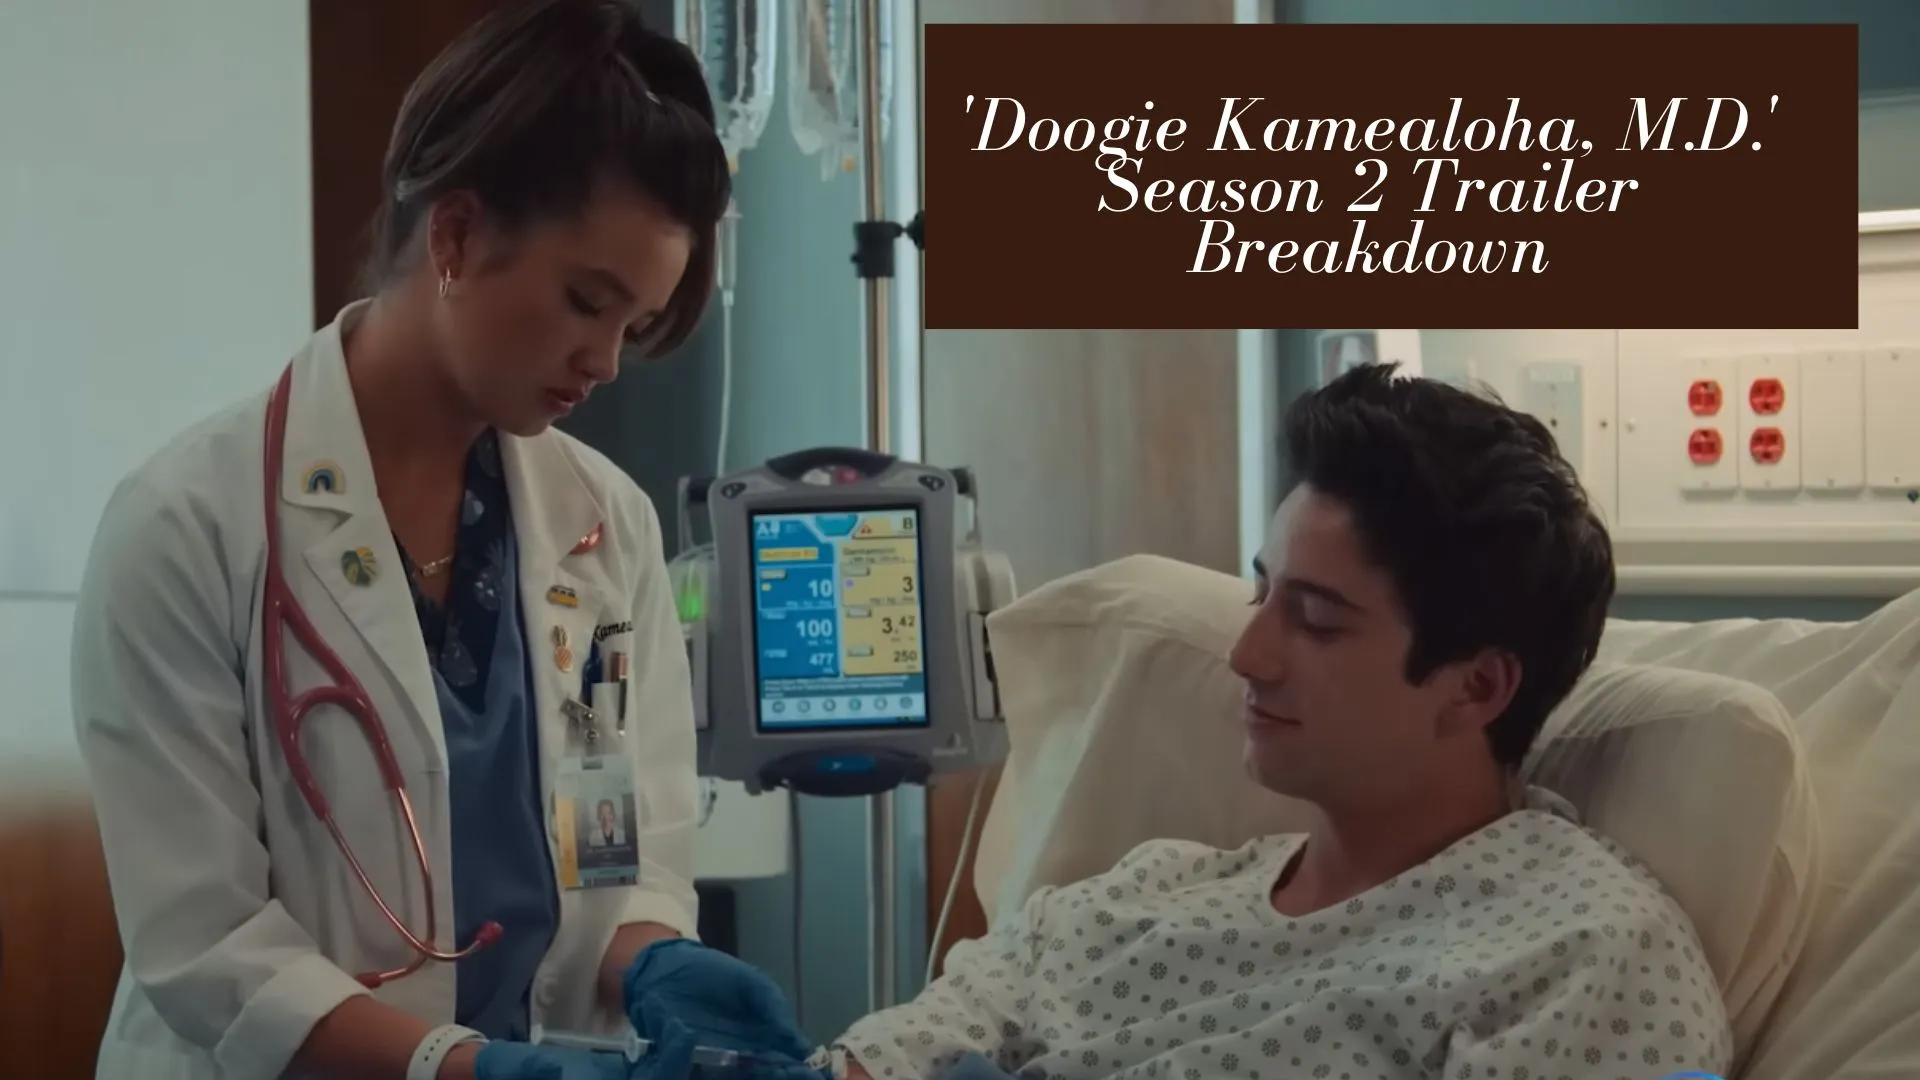 'Doogie Kamealoha, M.D.' Season 2 Trailer Breakdown (Image credit: Youtube)